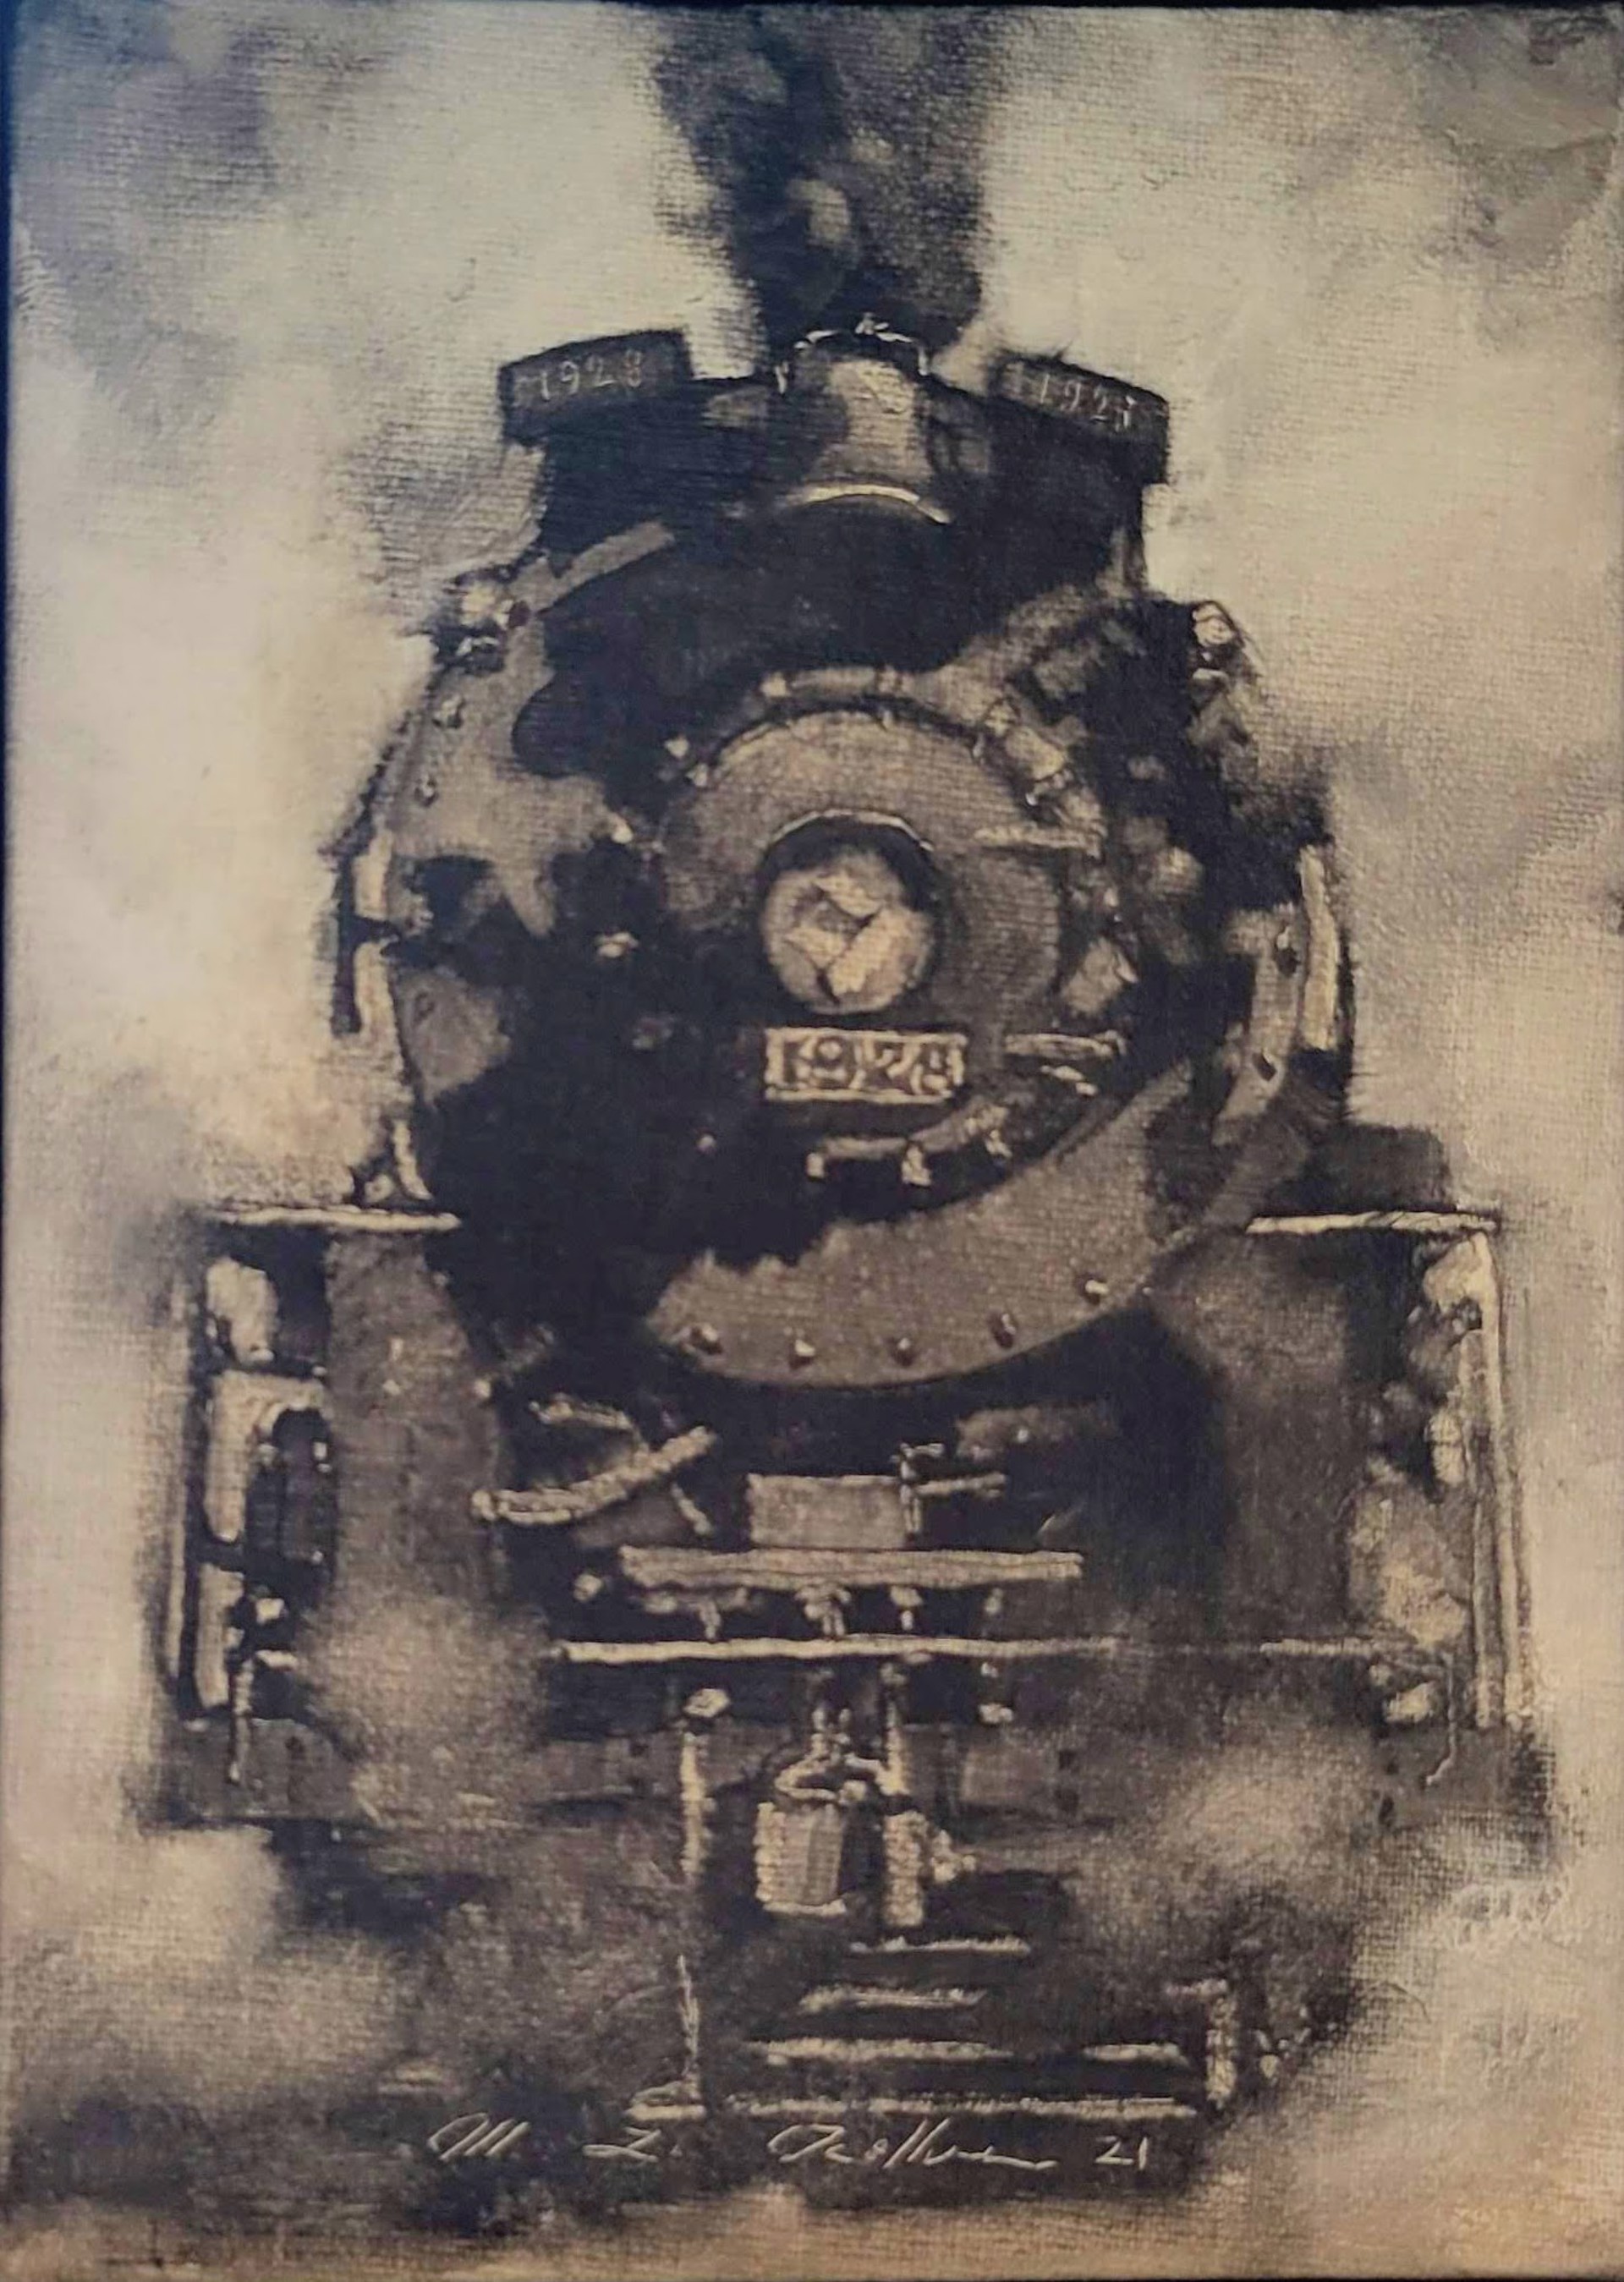 Ghost Train #1928 by Mitch Kolbe